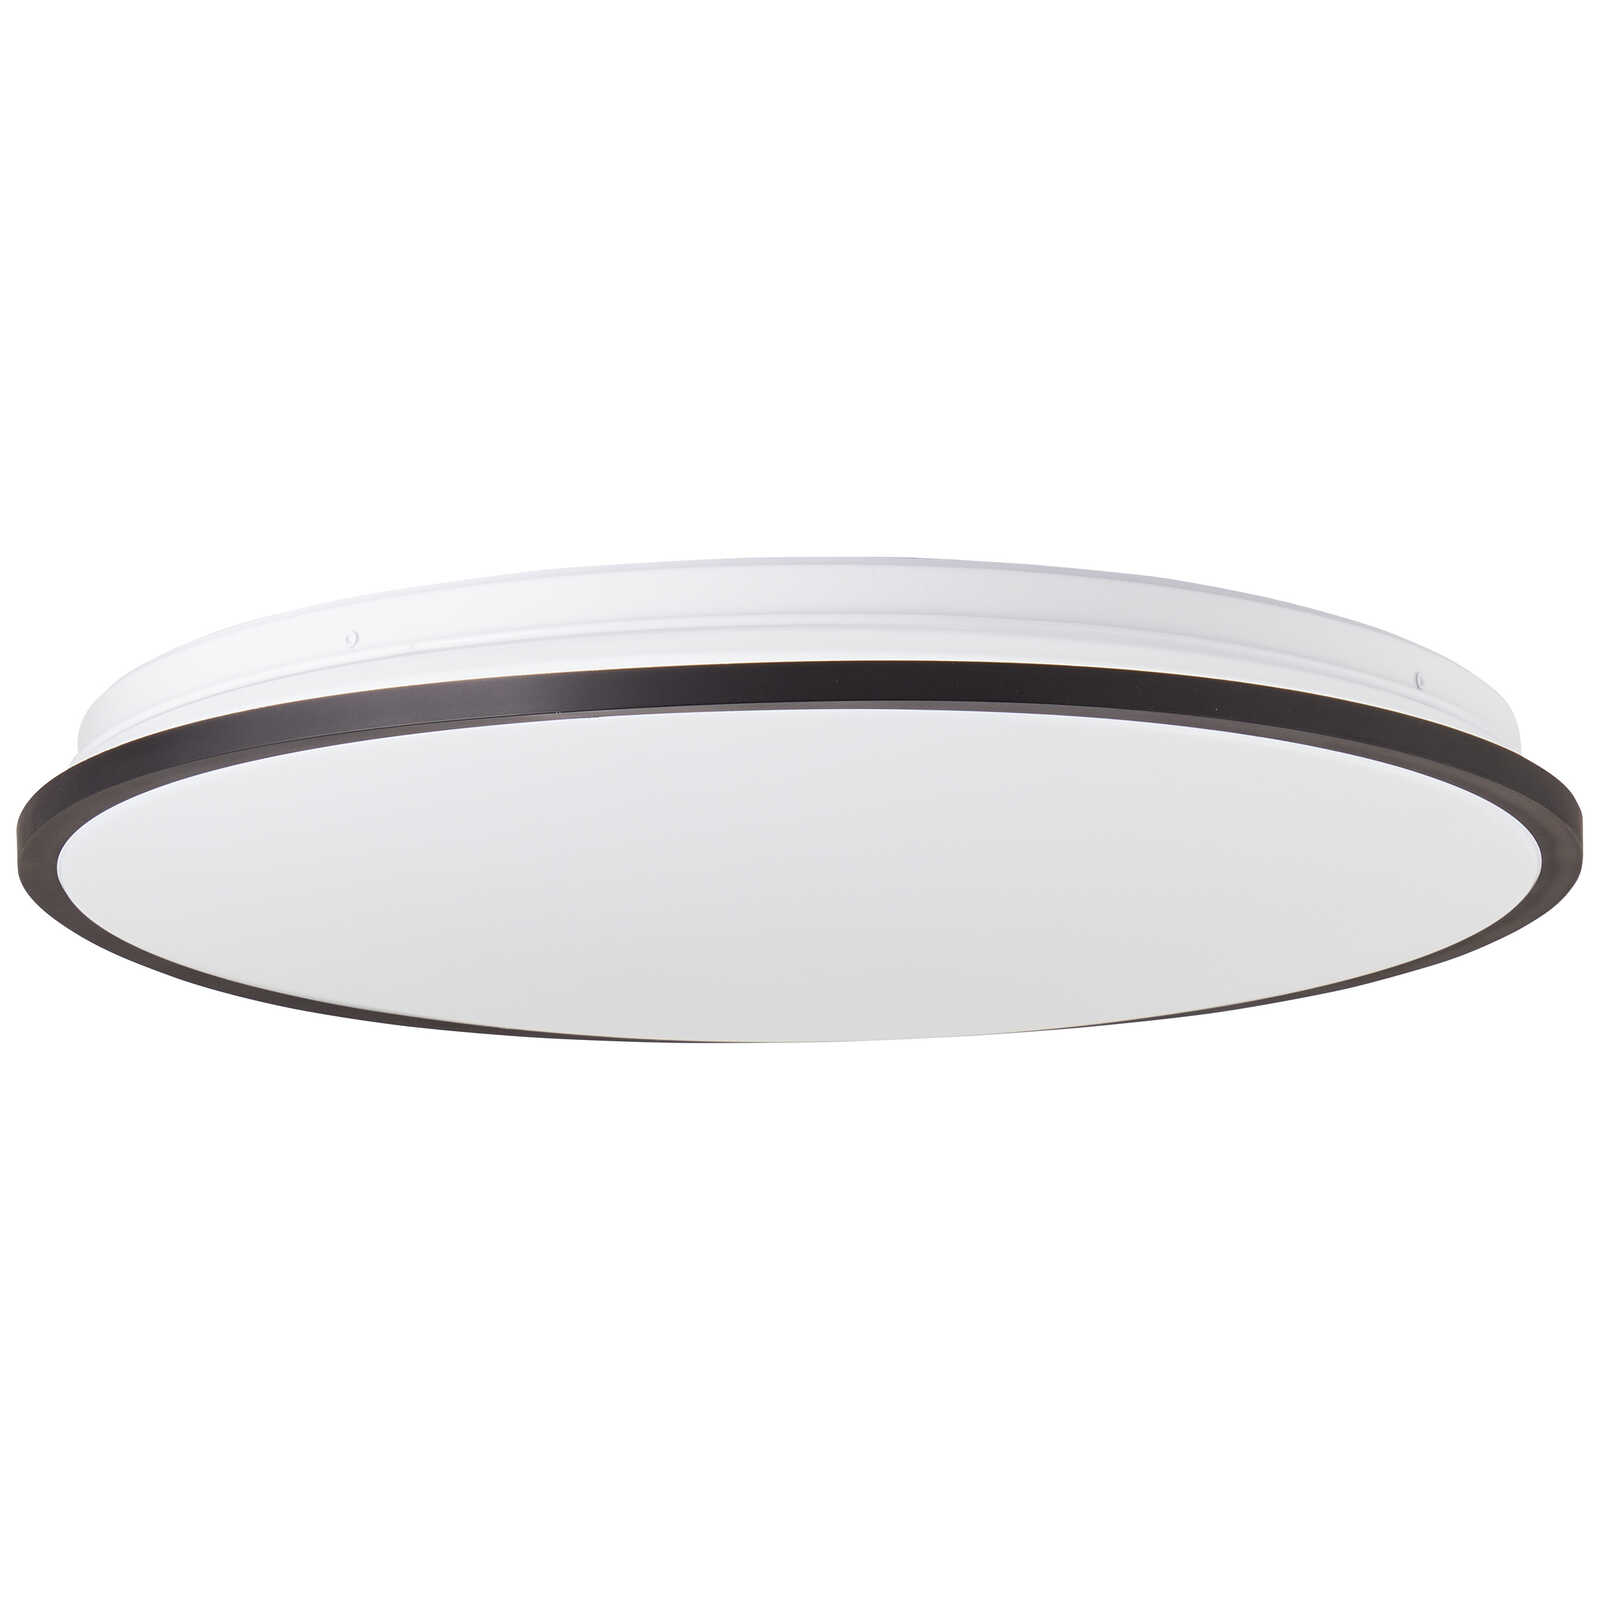             Plastic ceiling light - Iva 2 - Black
        